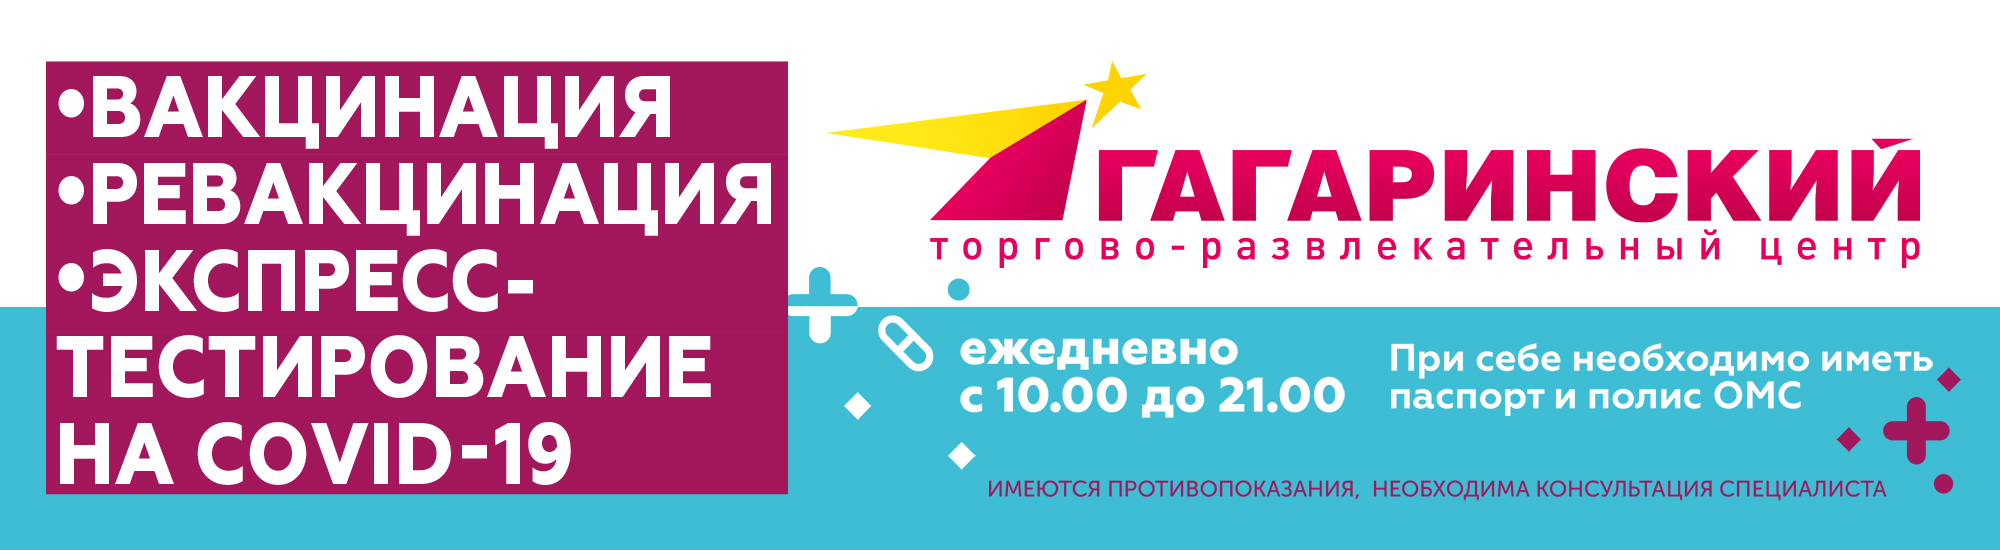 Гагаринский ТЦ Москва логотип